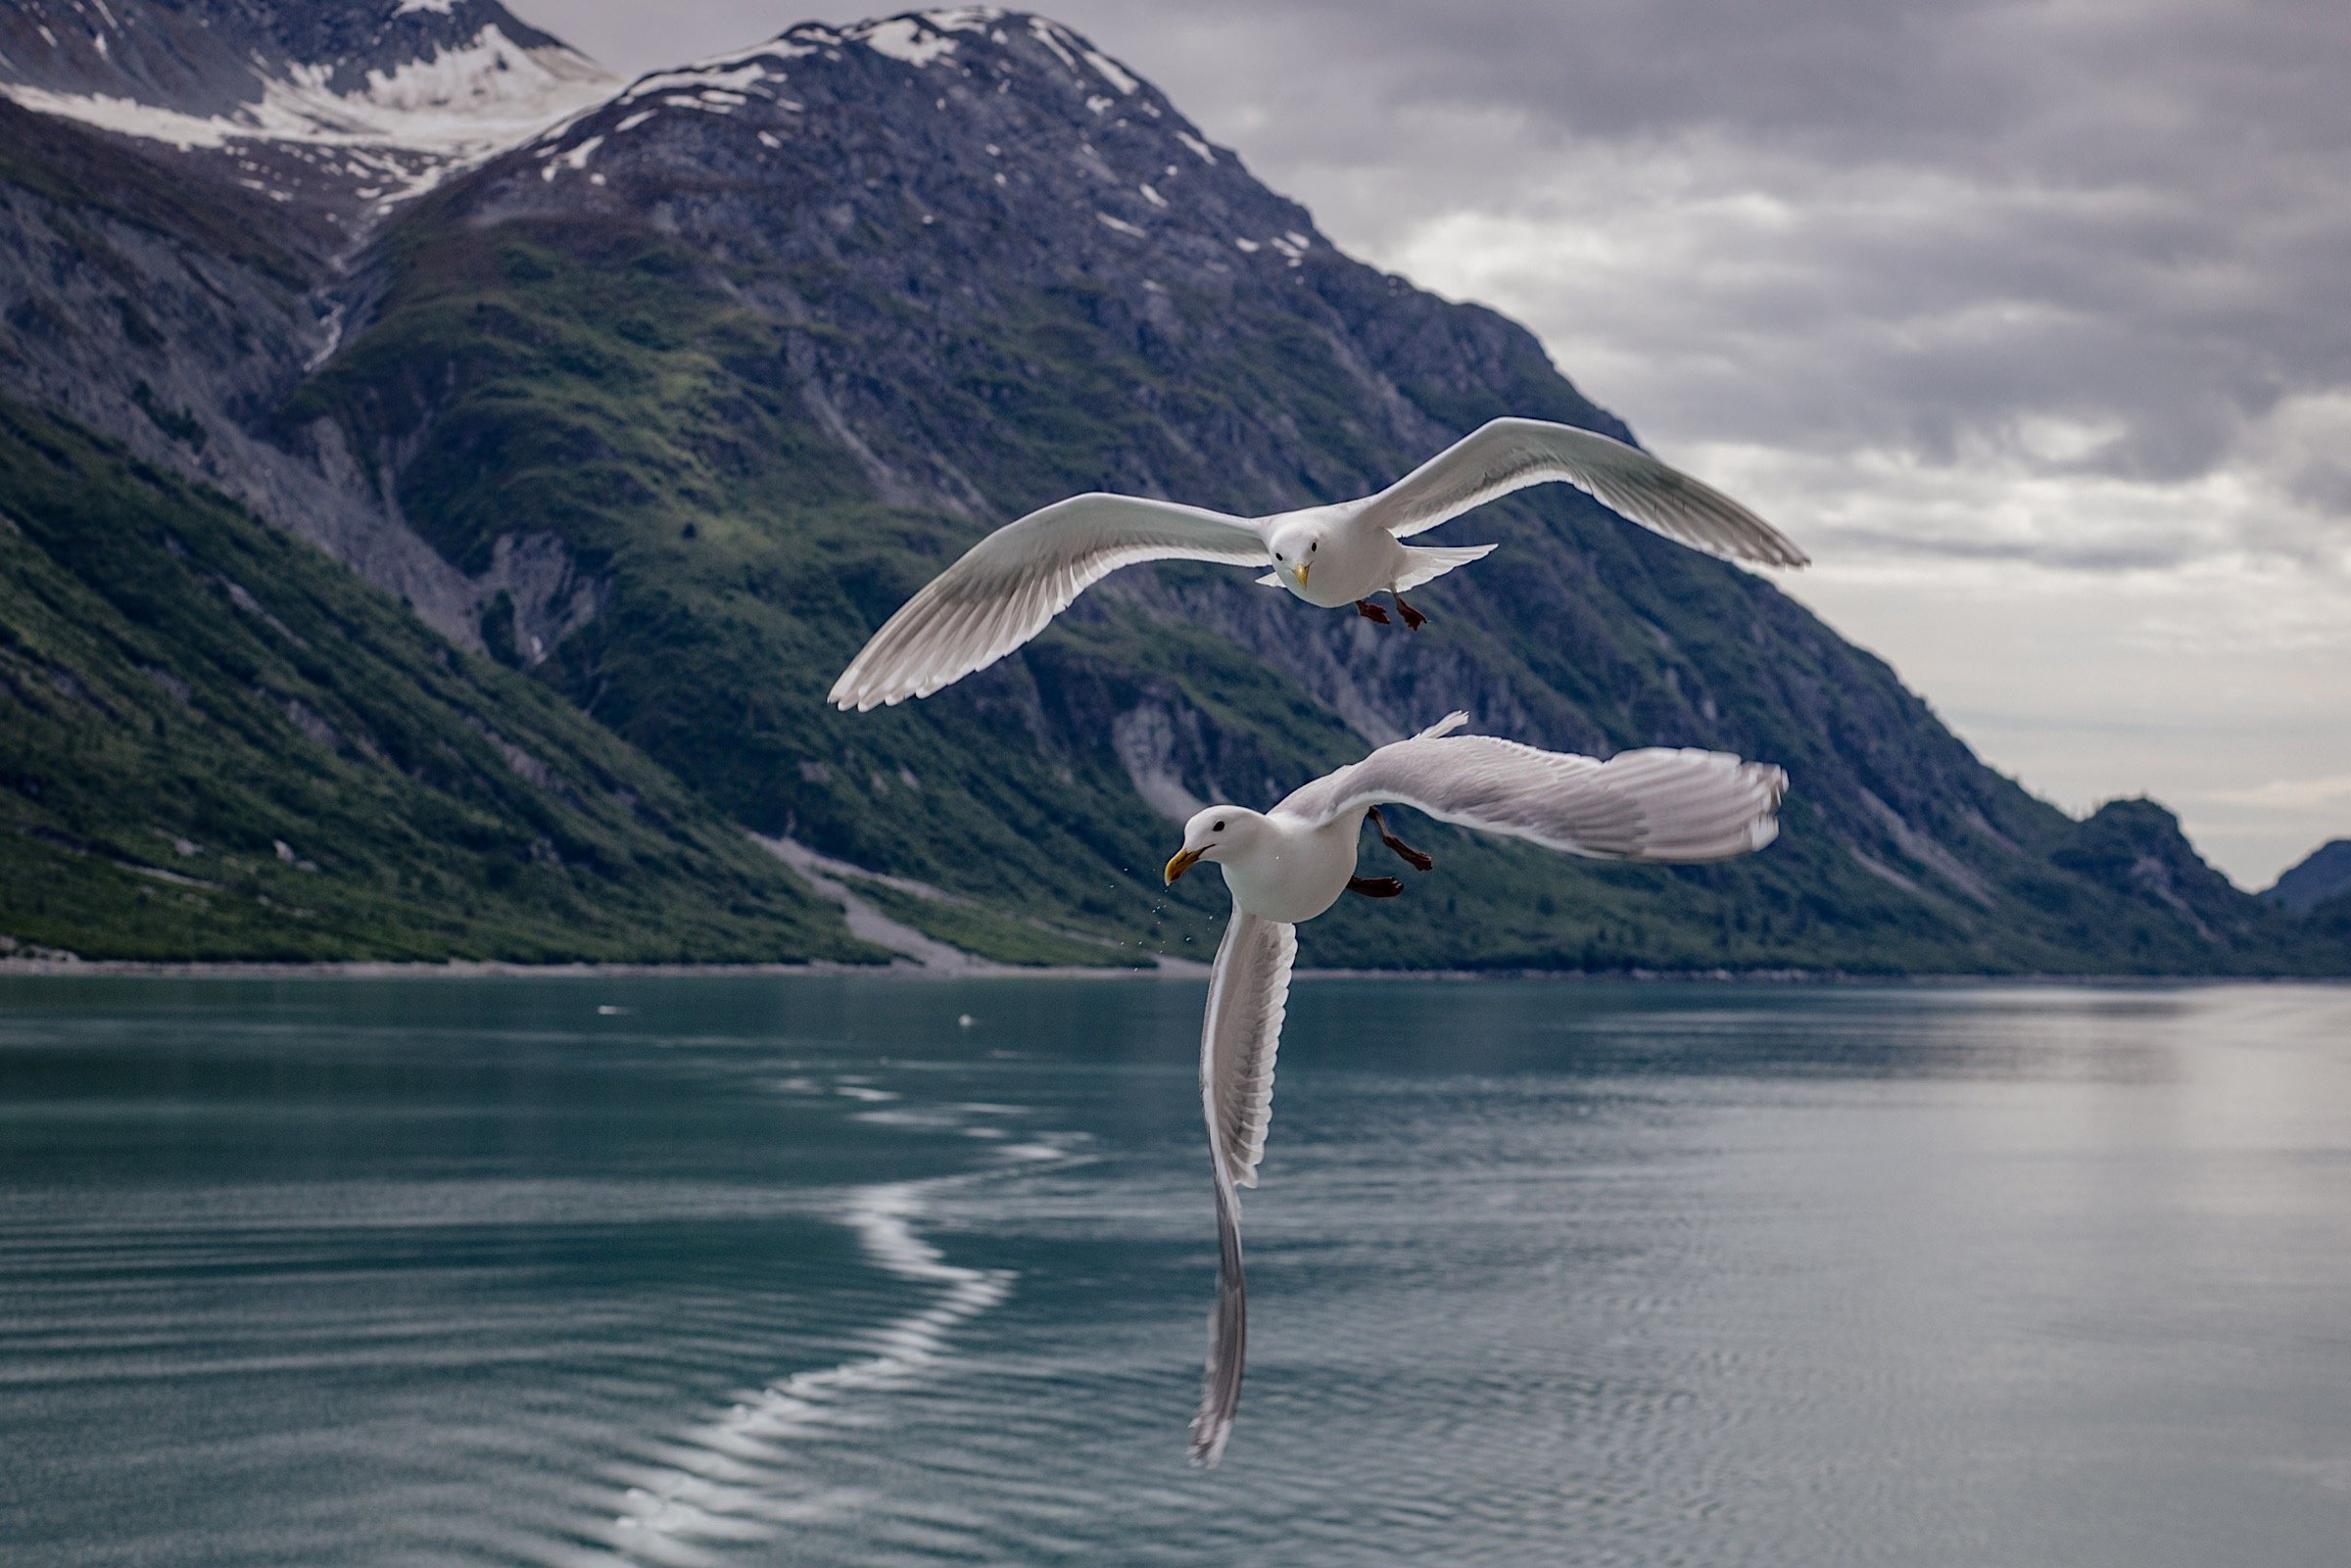 08_20180612_Alaskan Seagulls_Sam Walzade-7728.jpg